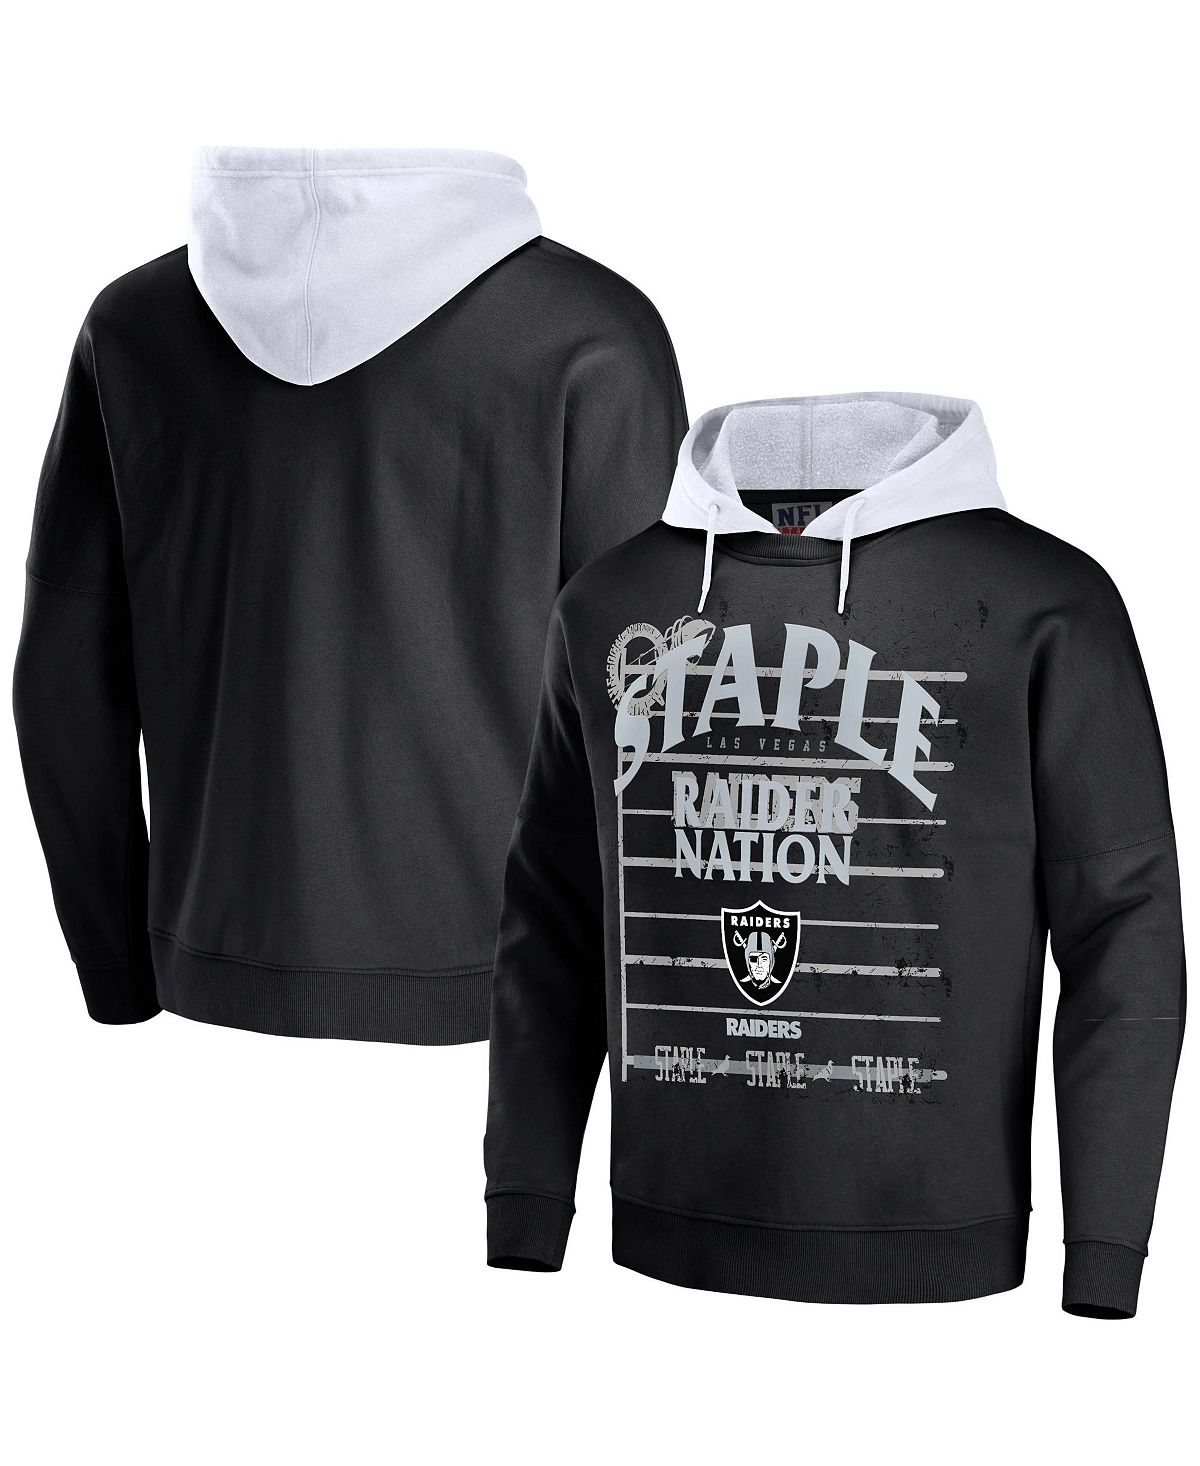 Мужская nfl x staple black las vegas raiders oversized gridiron vintage-like wash pullover hoodie NFL Properties, черный